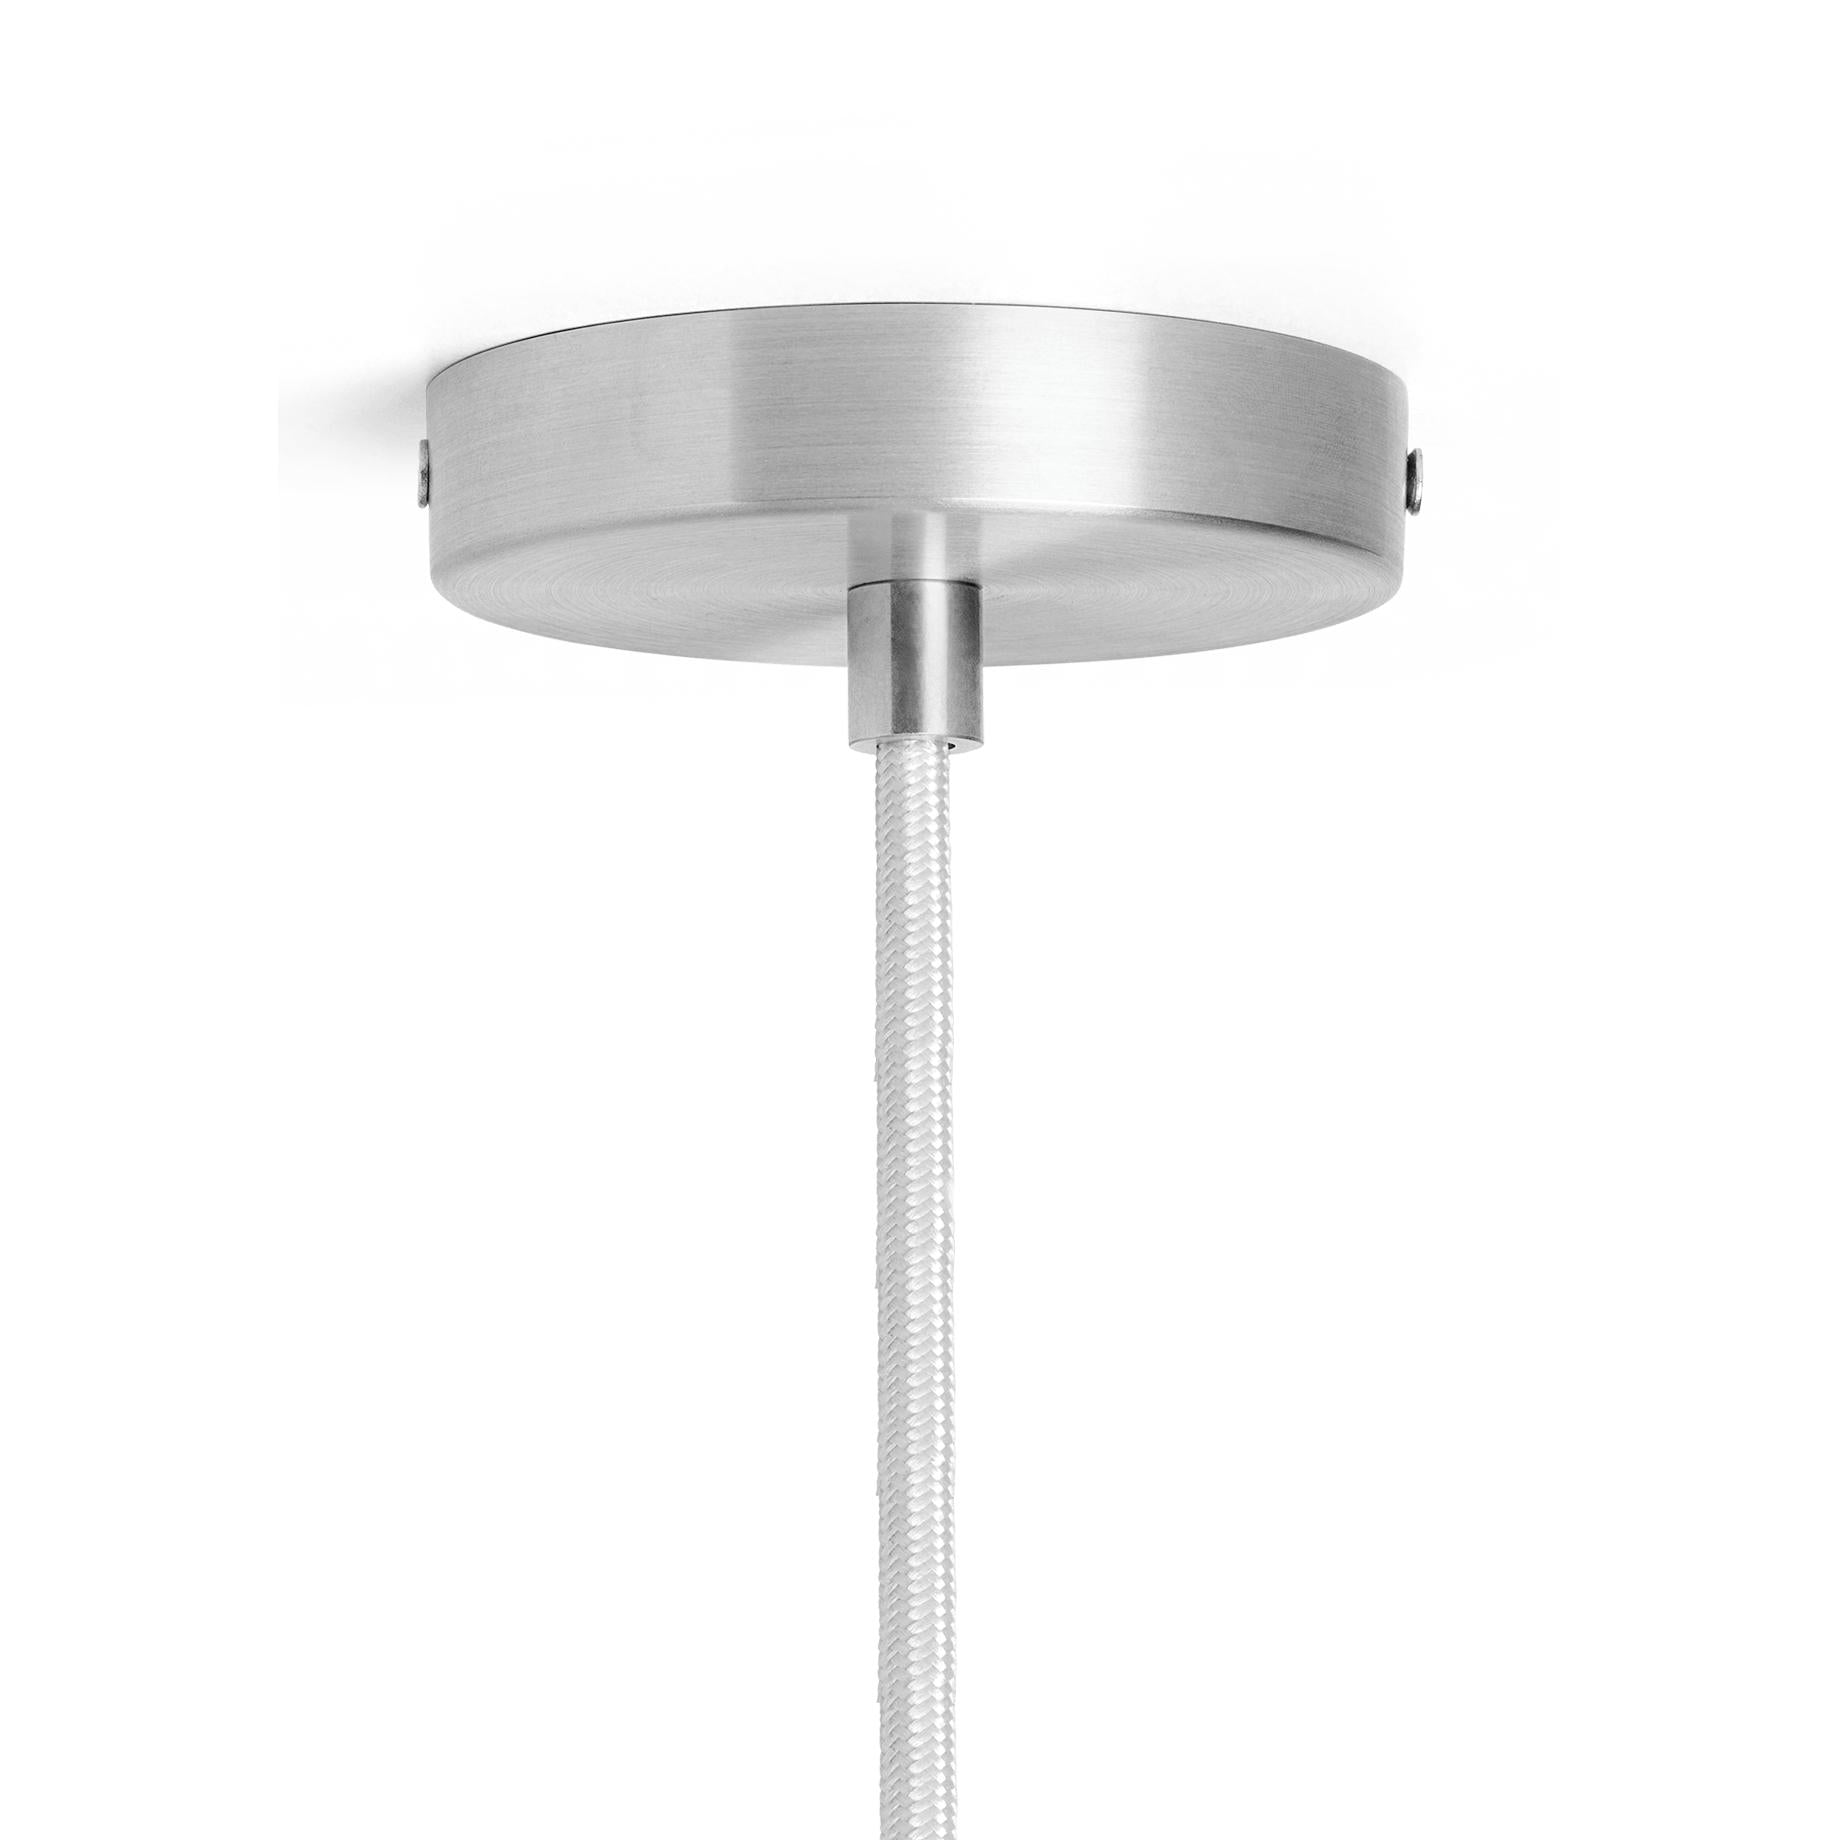 Ferm Living Vuelta Suspension Lamp roestvrij staal Ø60 cm, wit